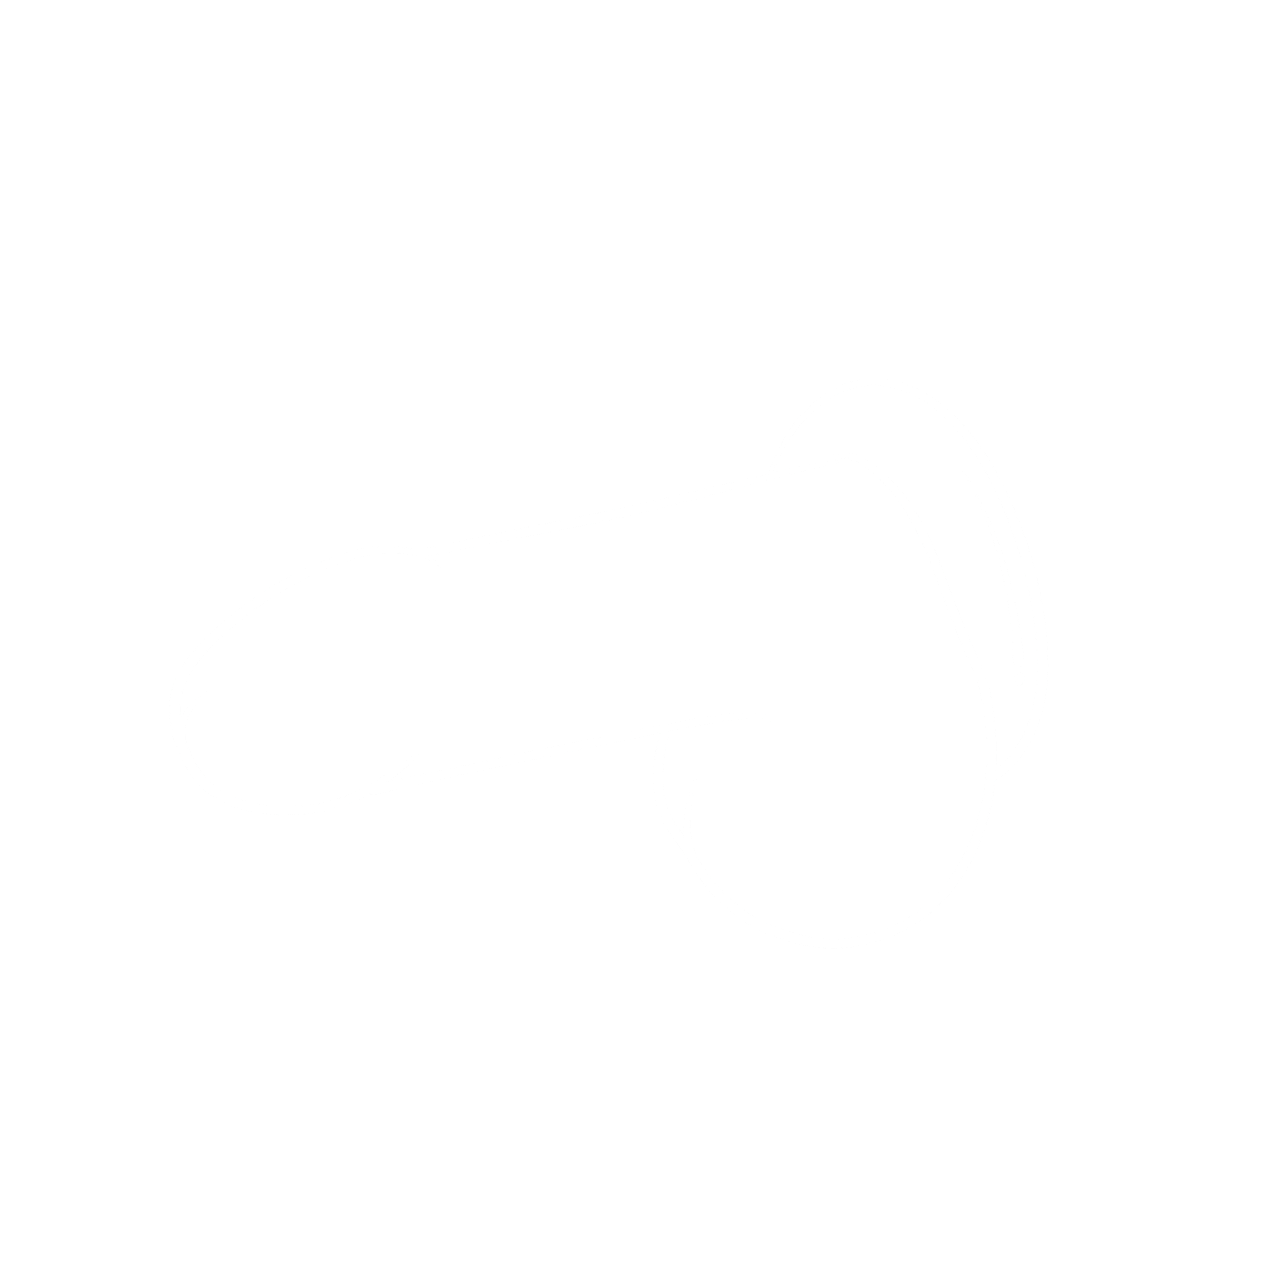 Cock ring illustration